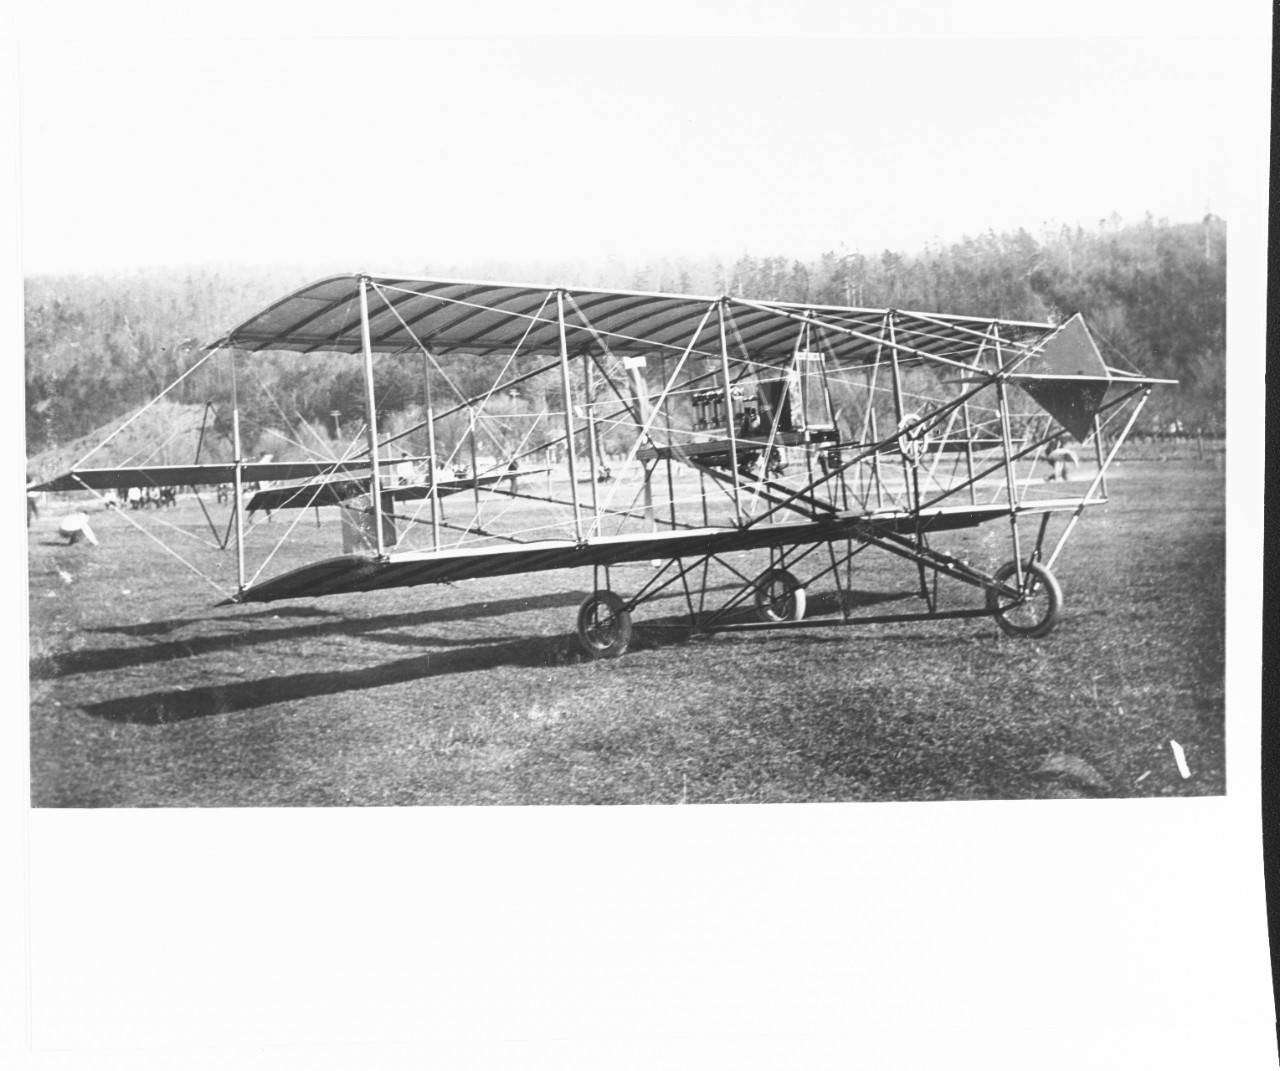 Curtiss 4-cylinder pusher biplane